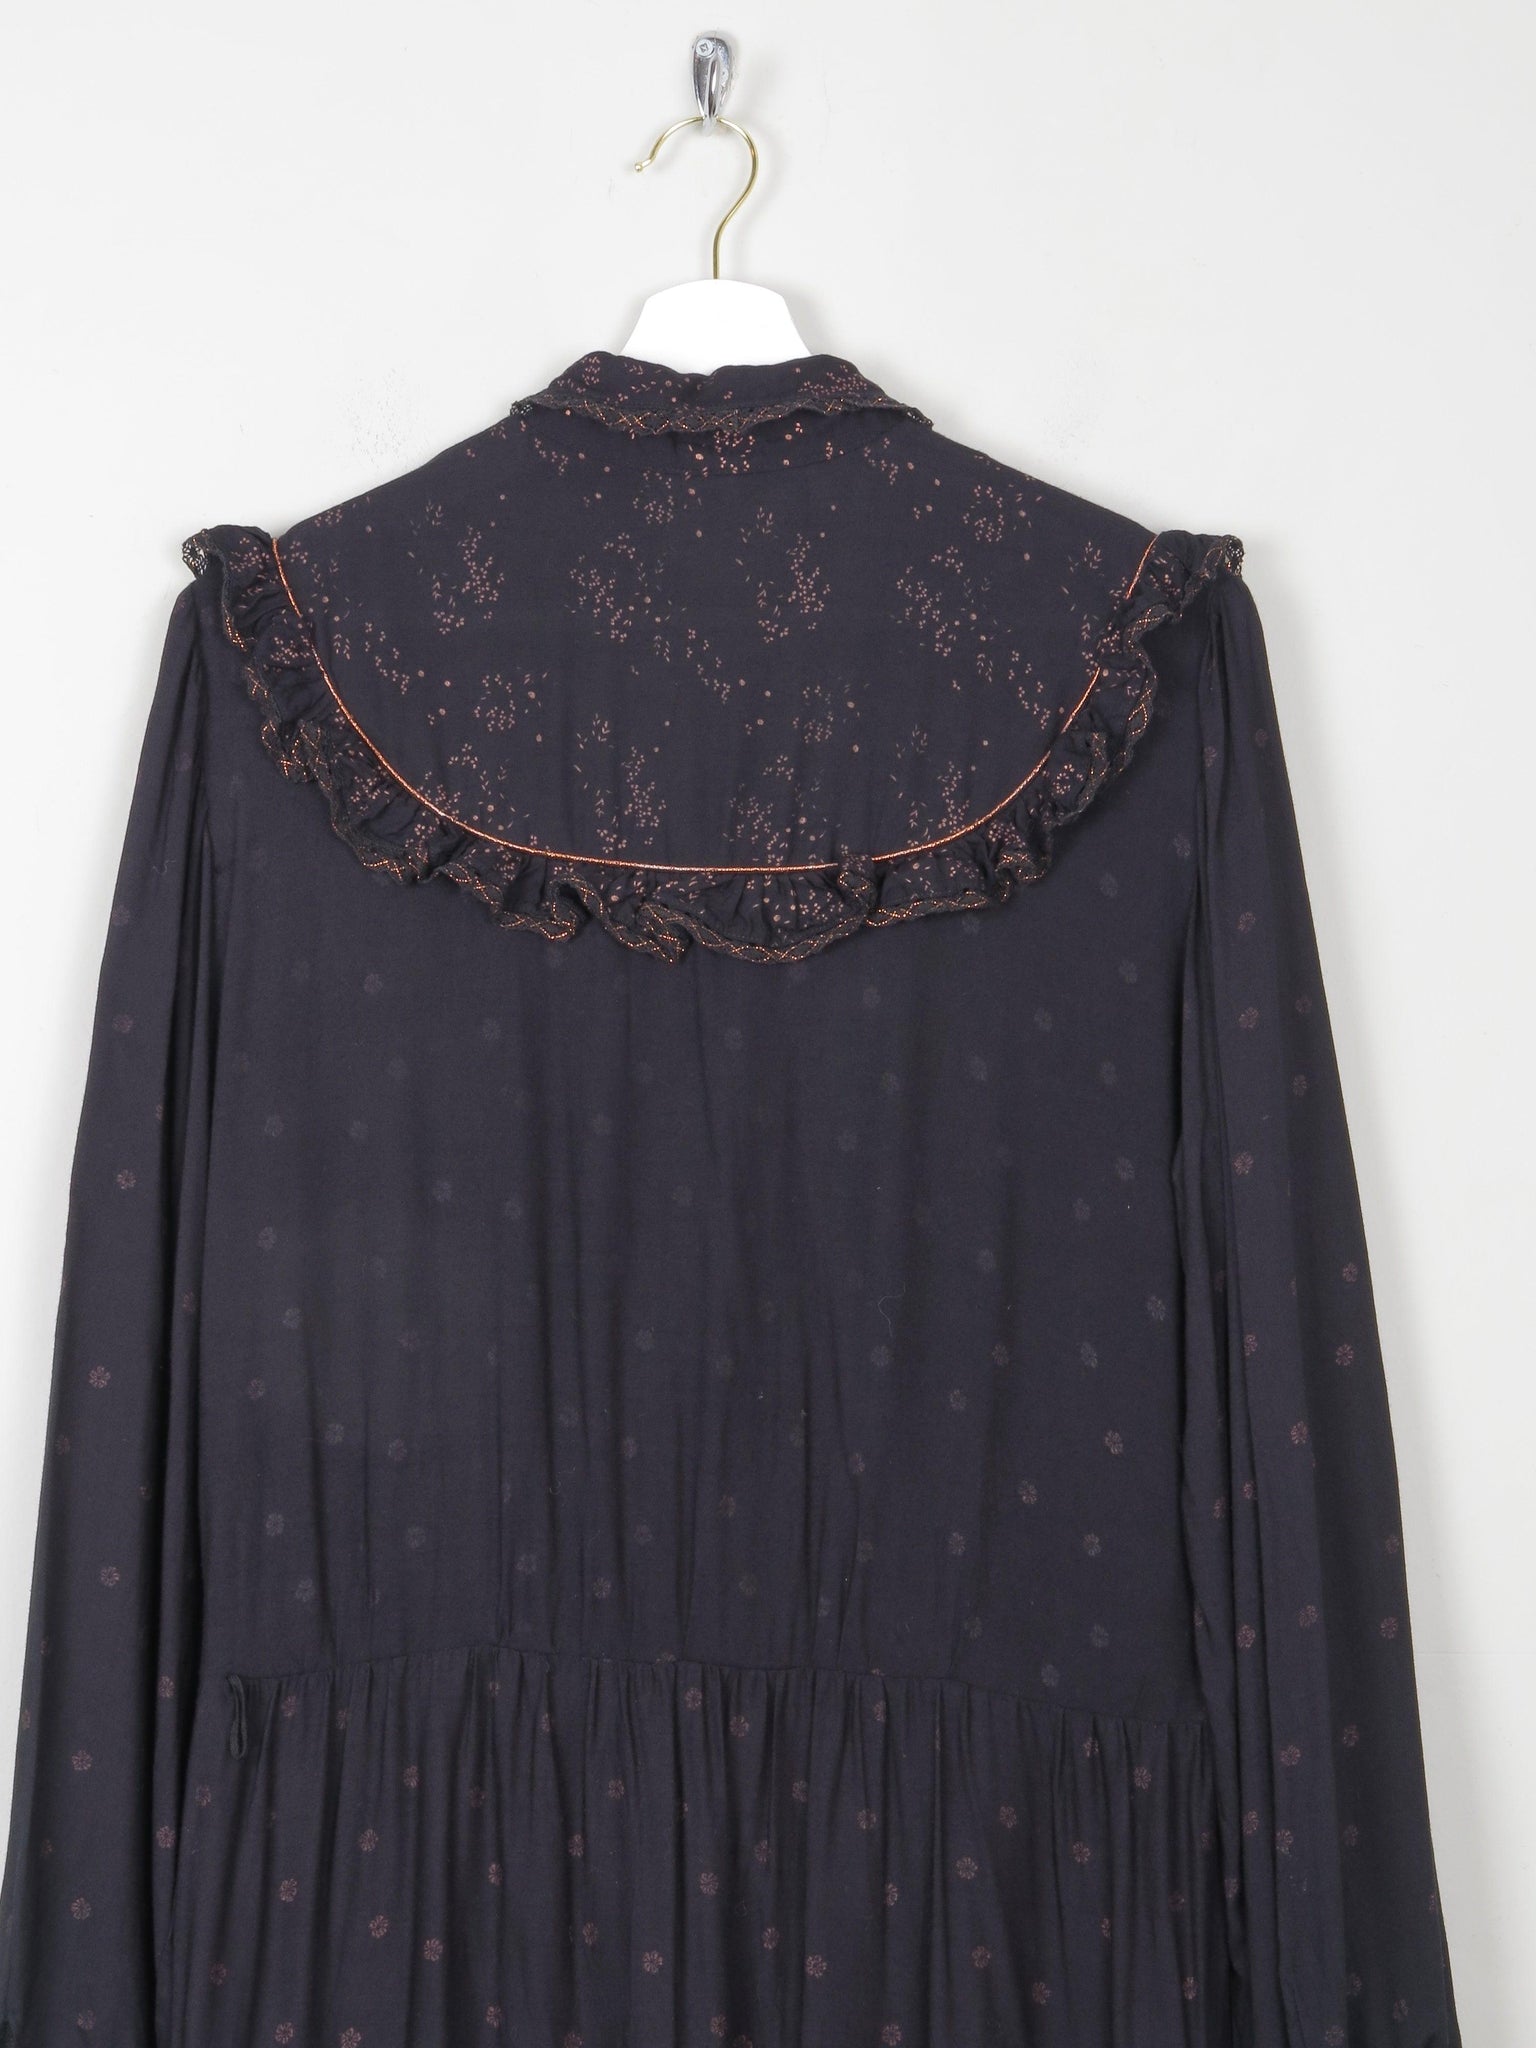 Black & Bronze 1970s Prairie Style Midi Dress L - The Harlequin